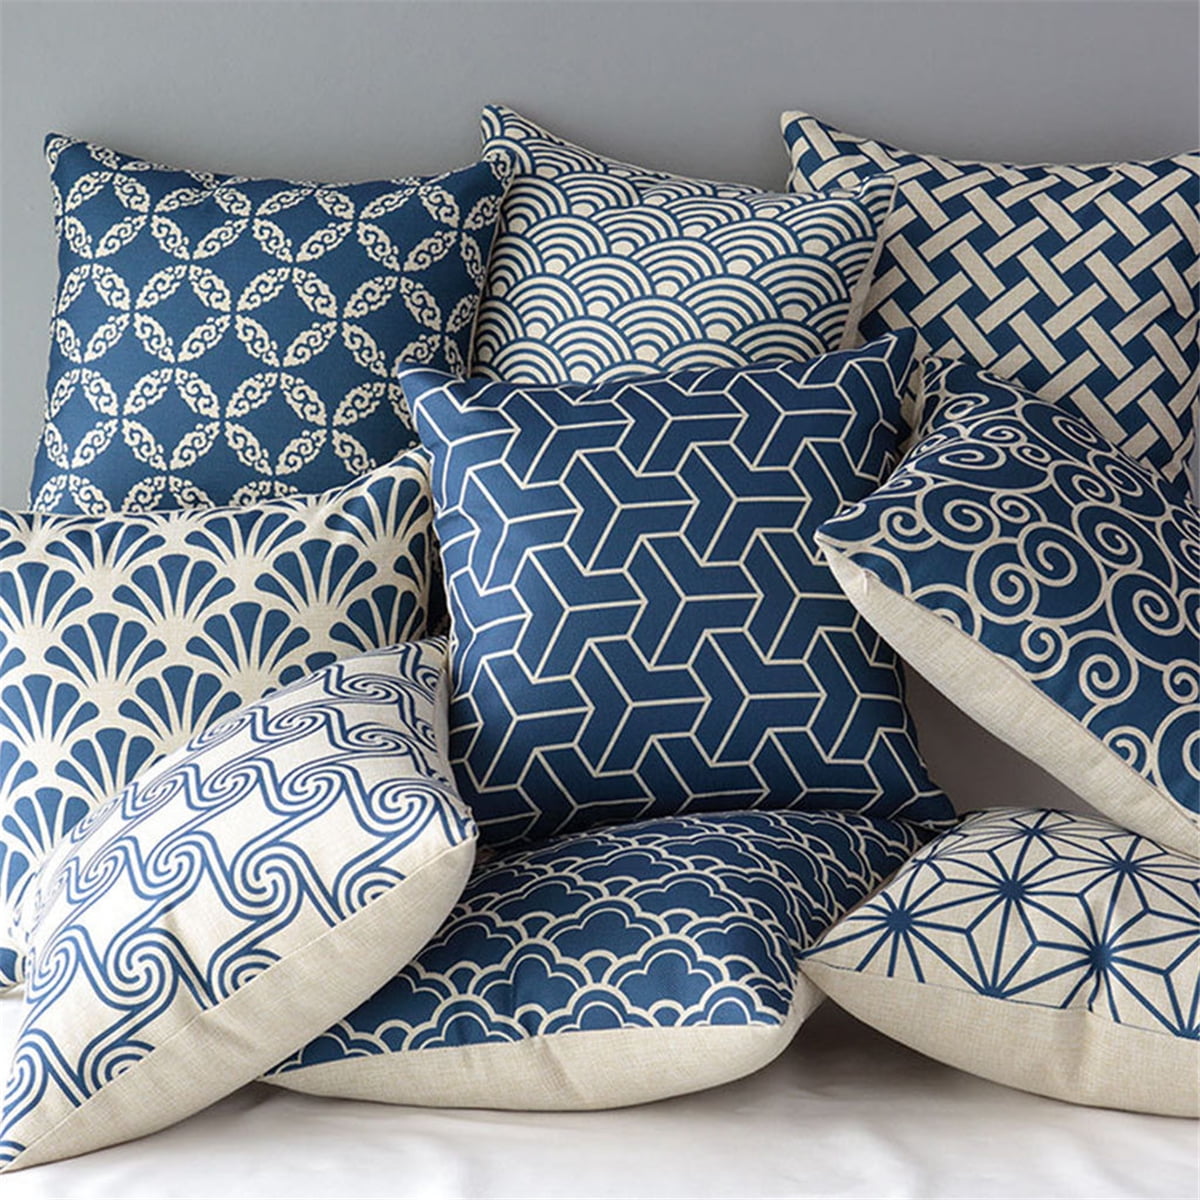 Decorative Art Style Geometric Throw Waist Cushion Cover Pillow Case Home Decor 